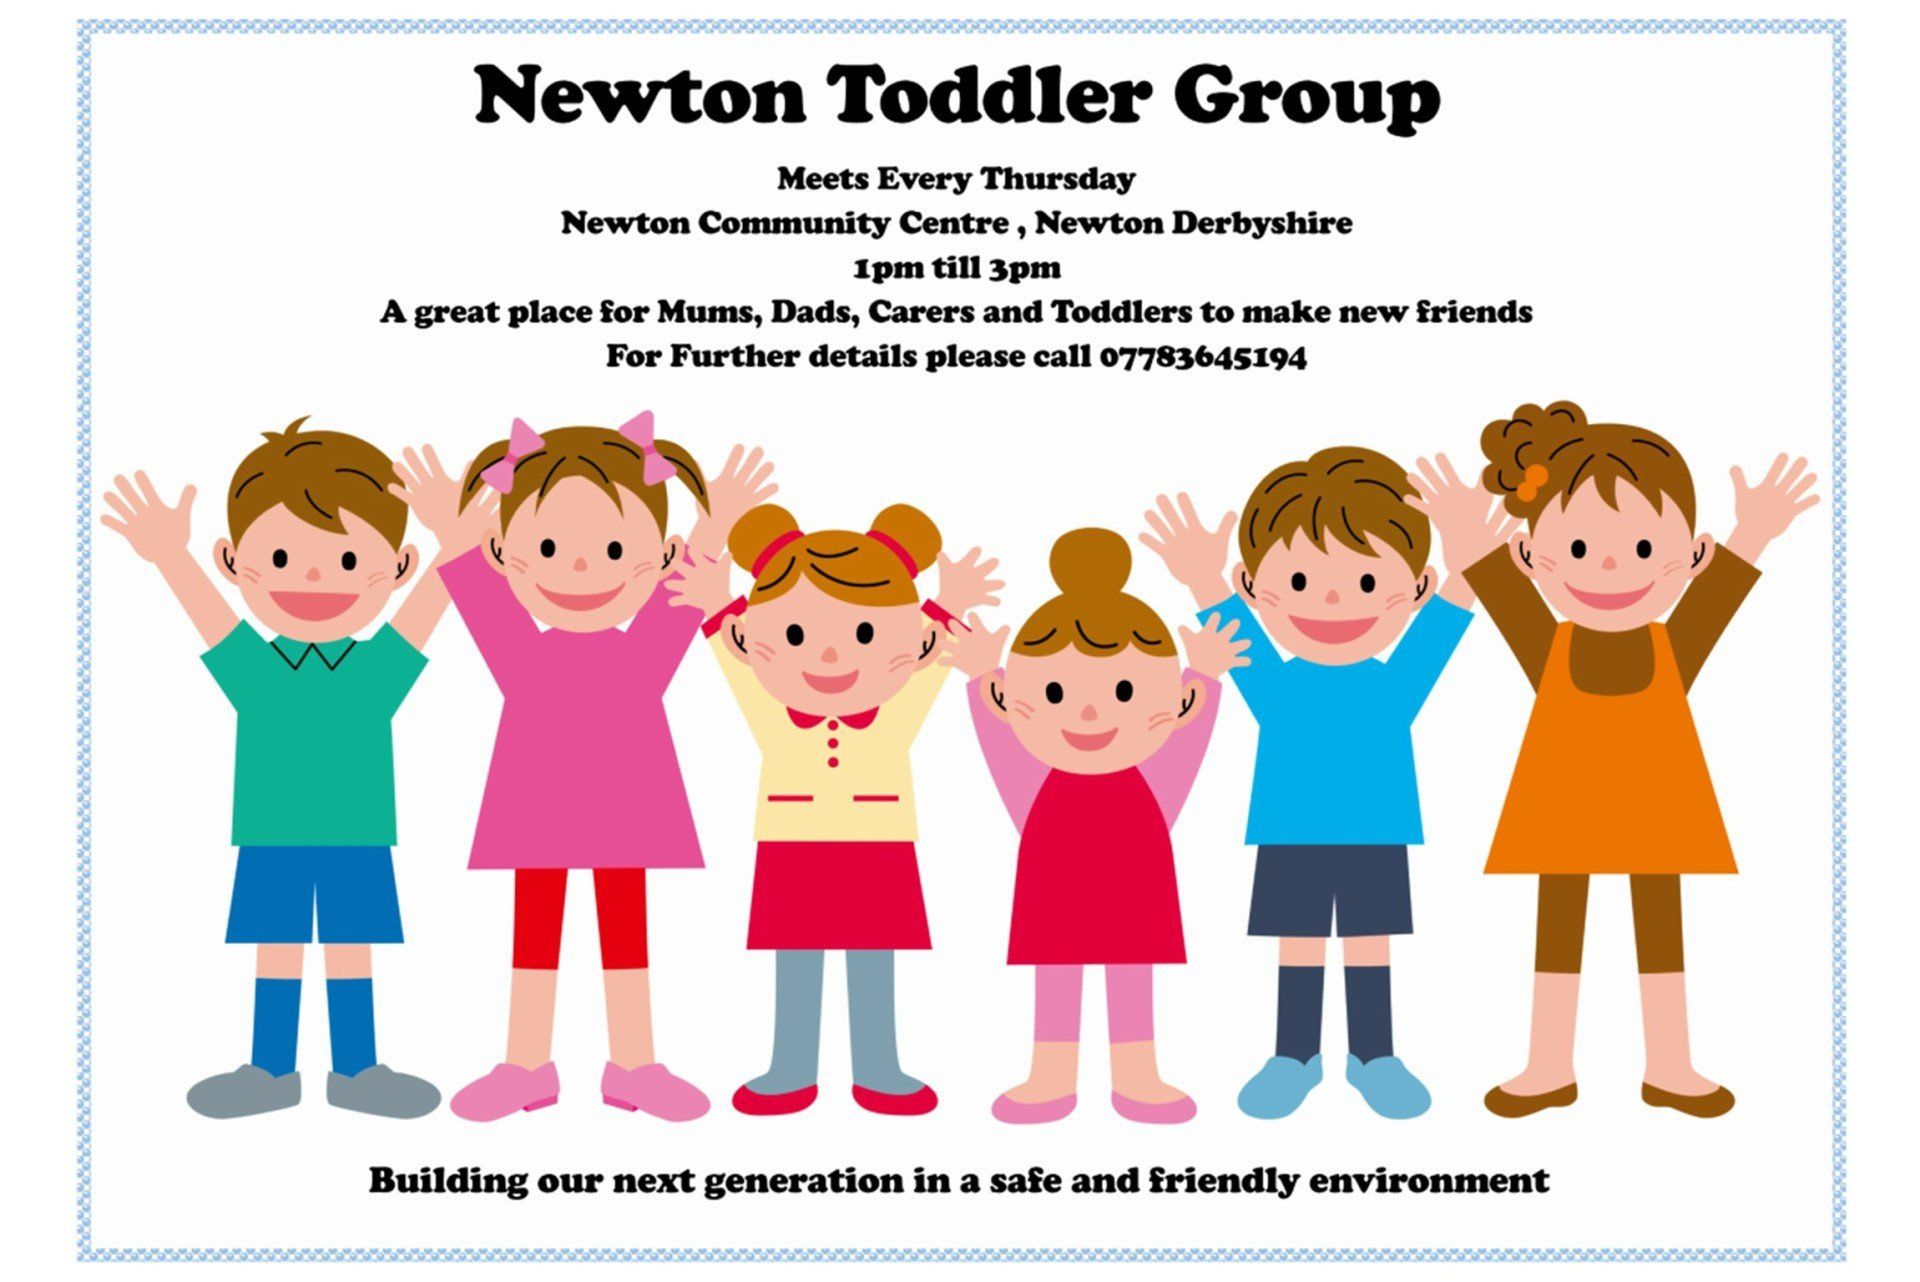 Newton Toddler Group flyer